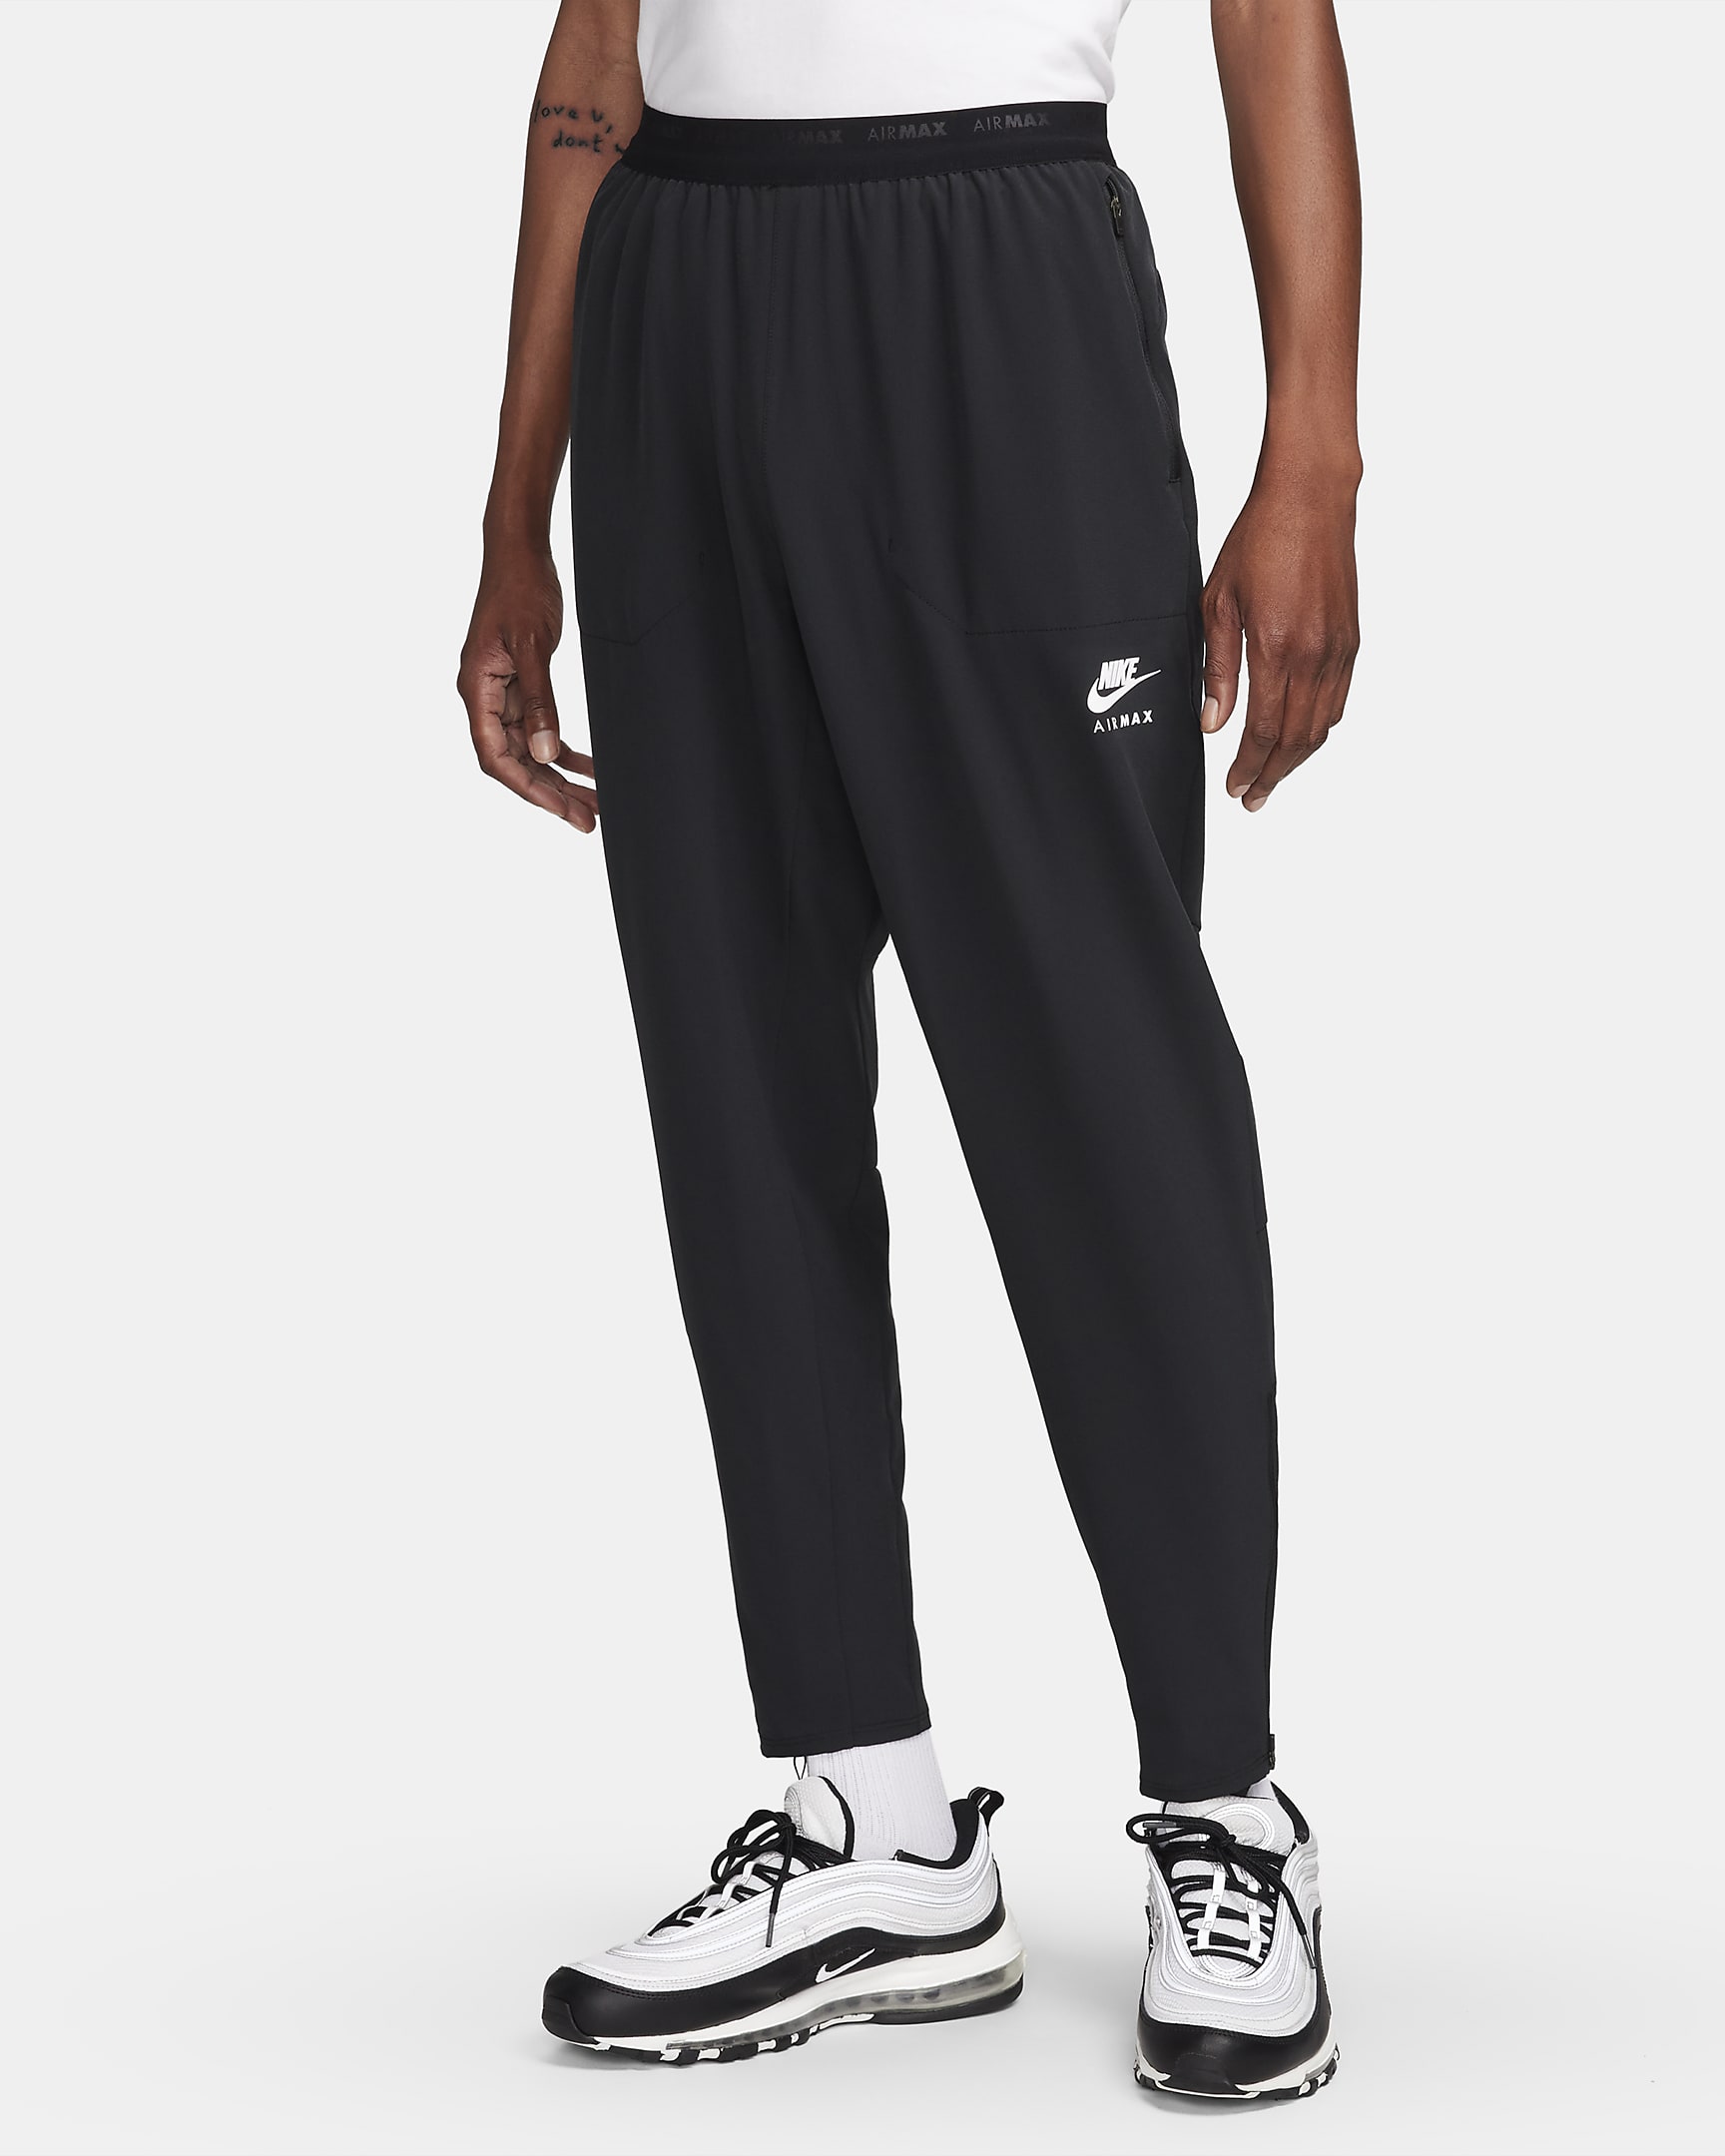 Nike Air Max Men's Woven Trousers. Nike ZA